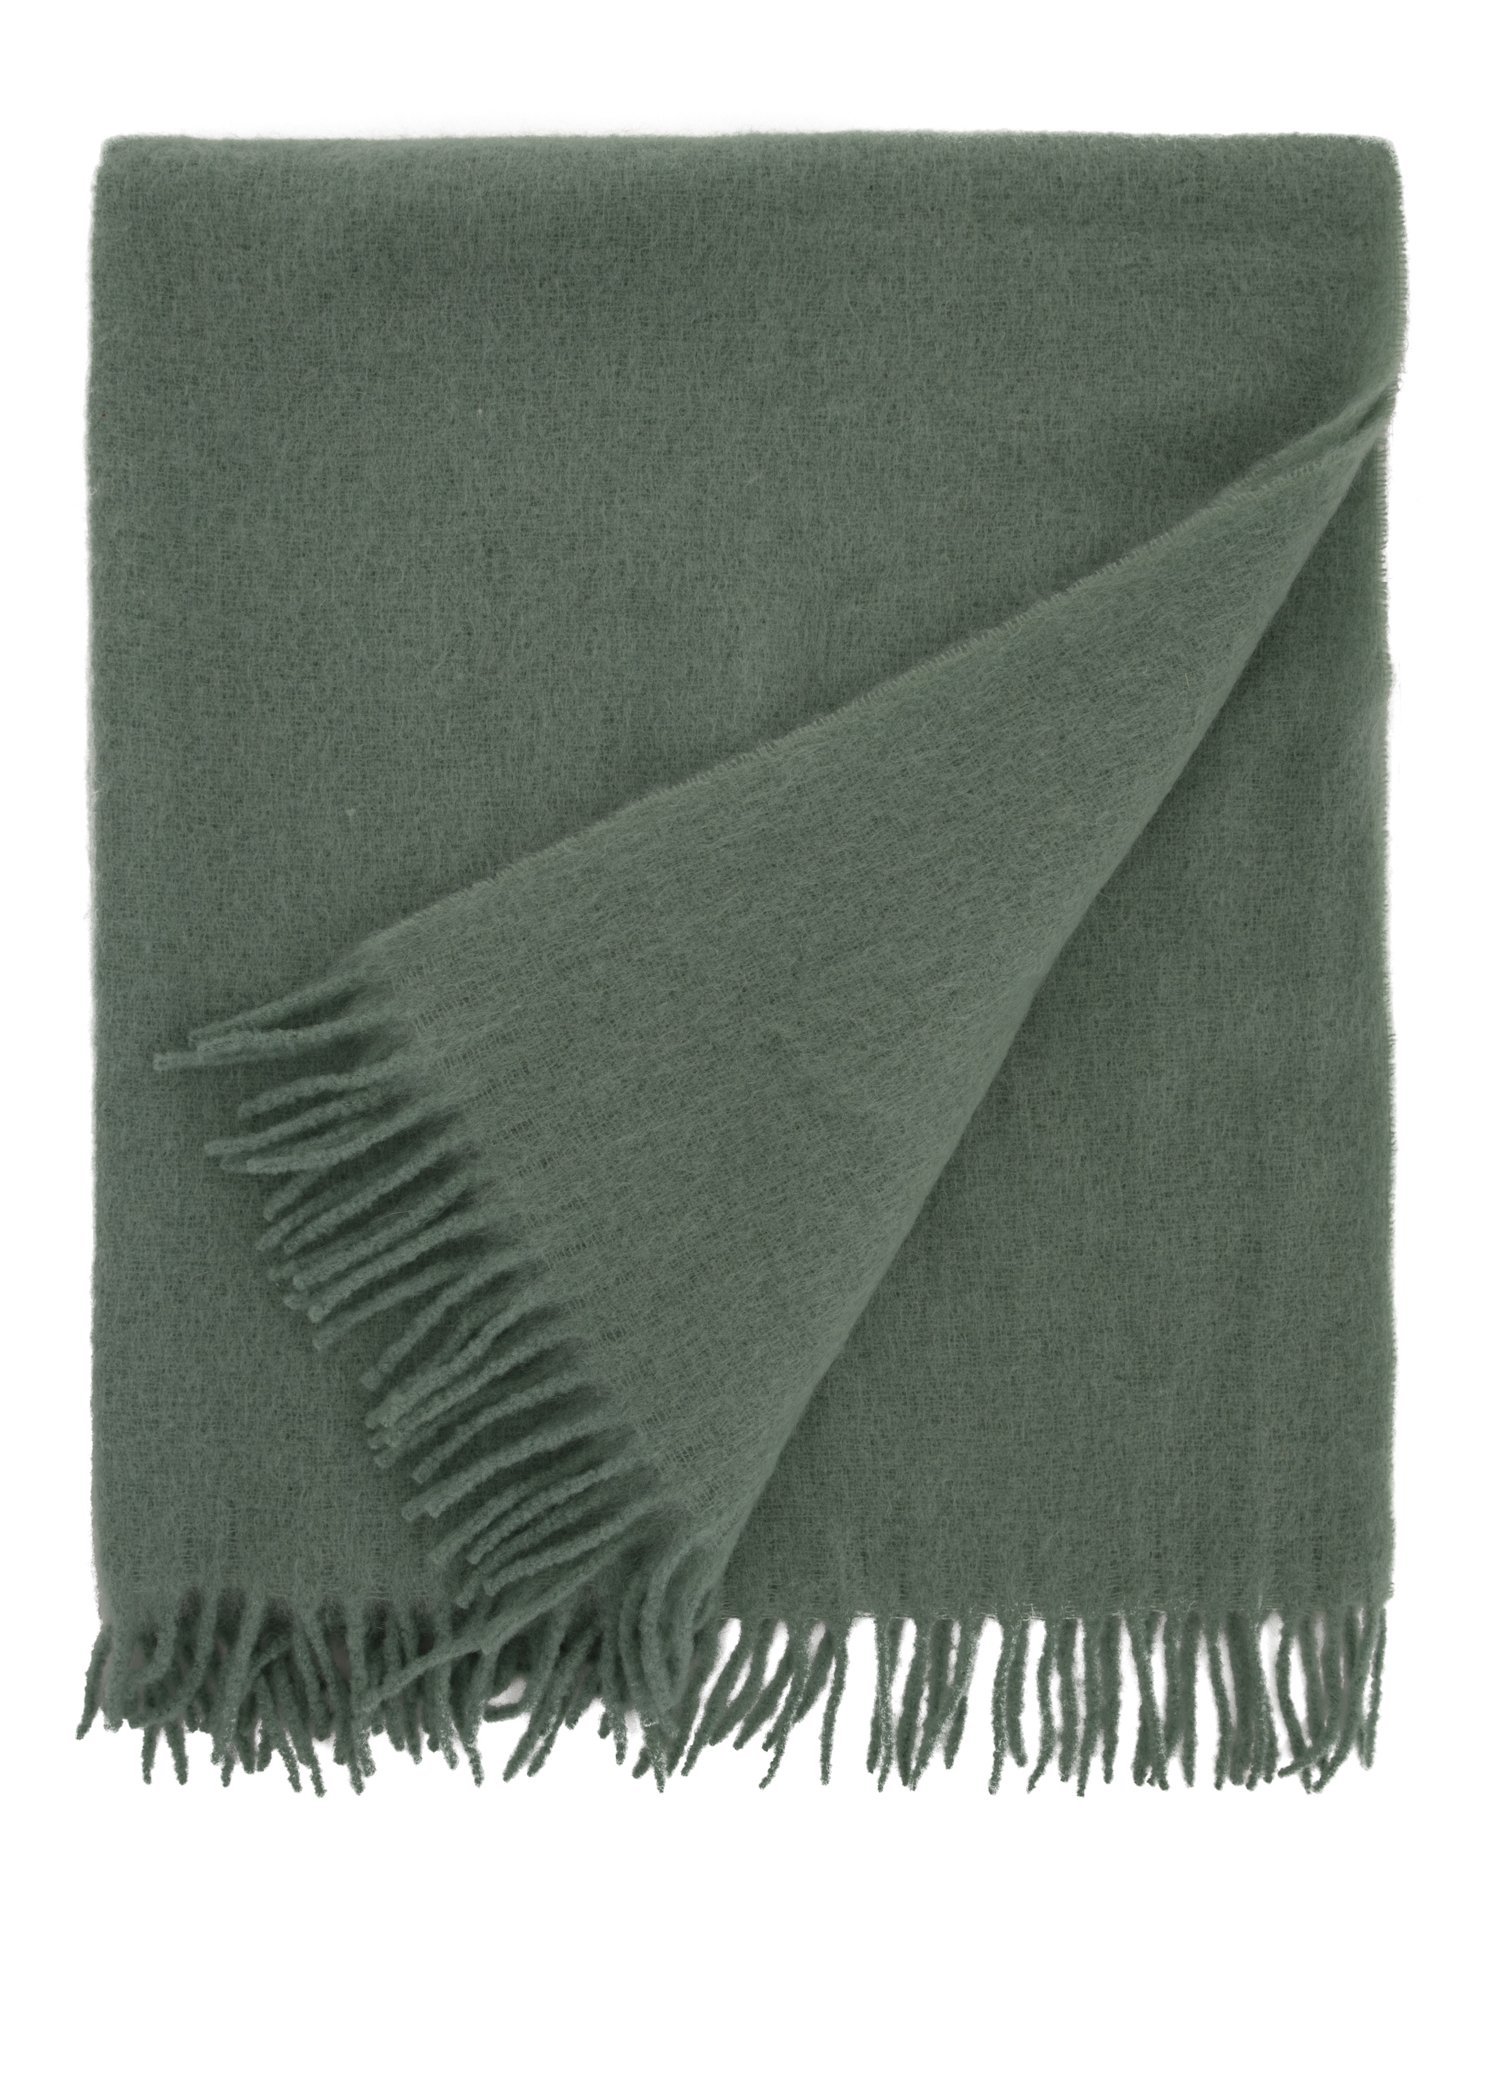 Blanket with fringes